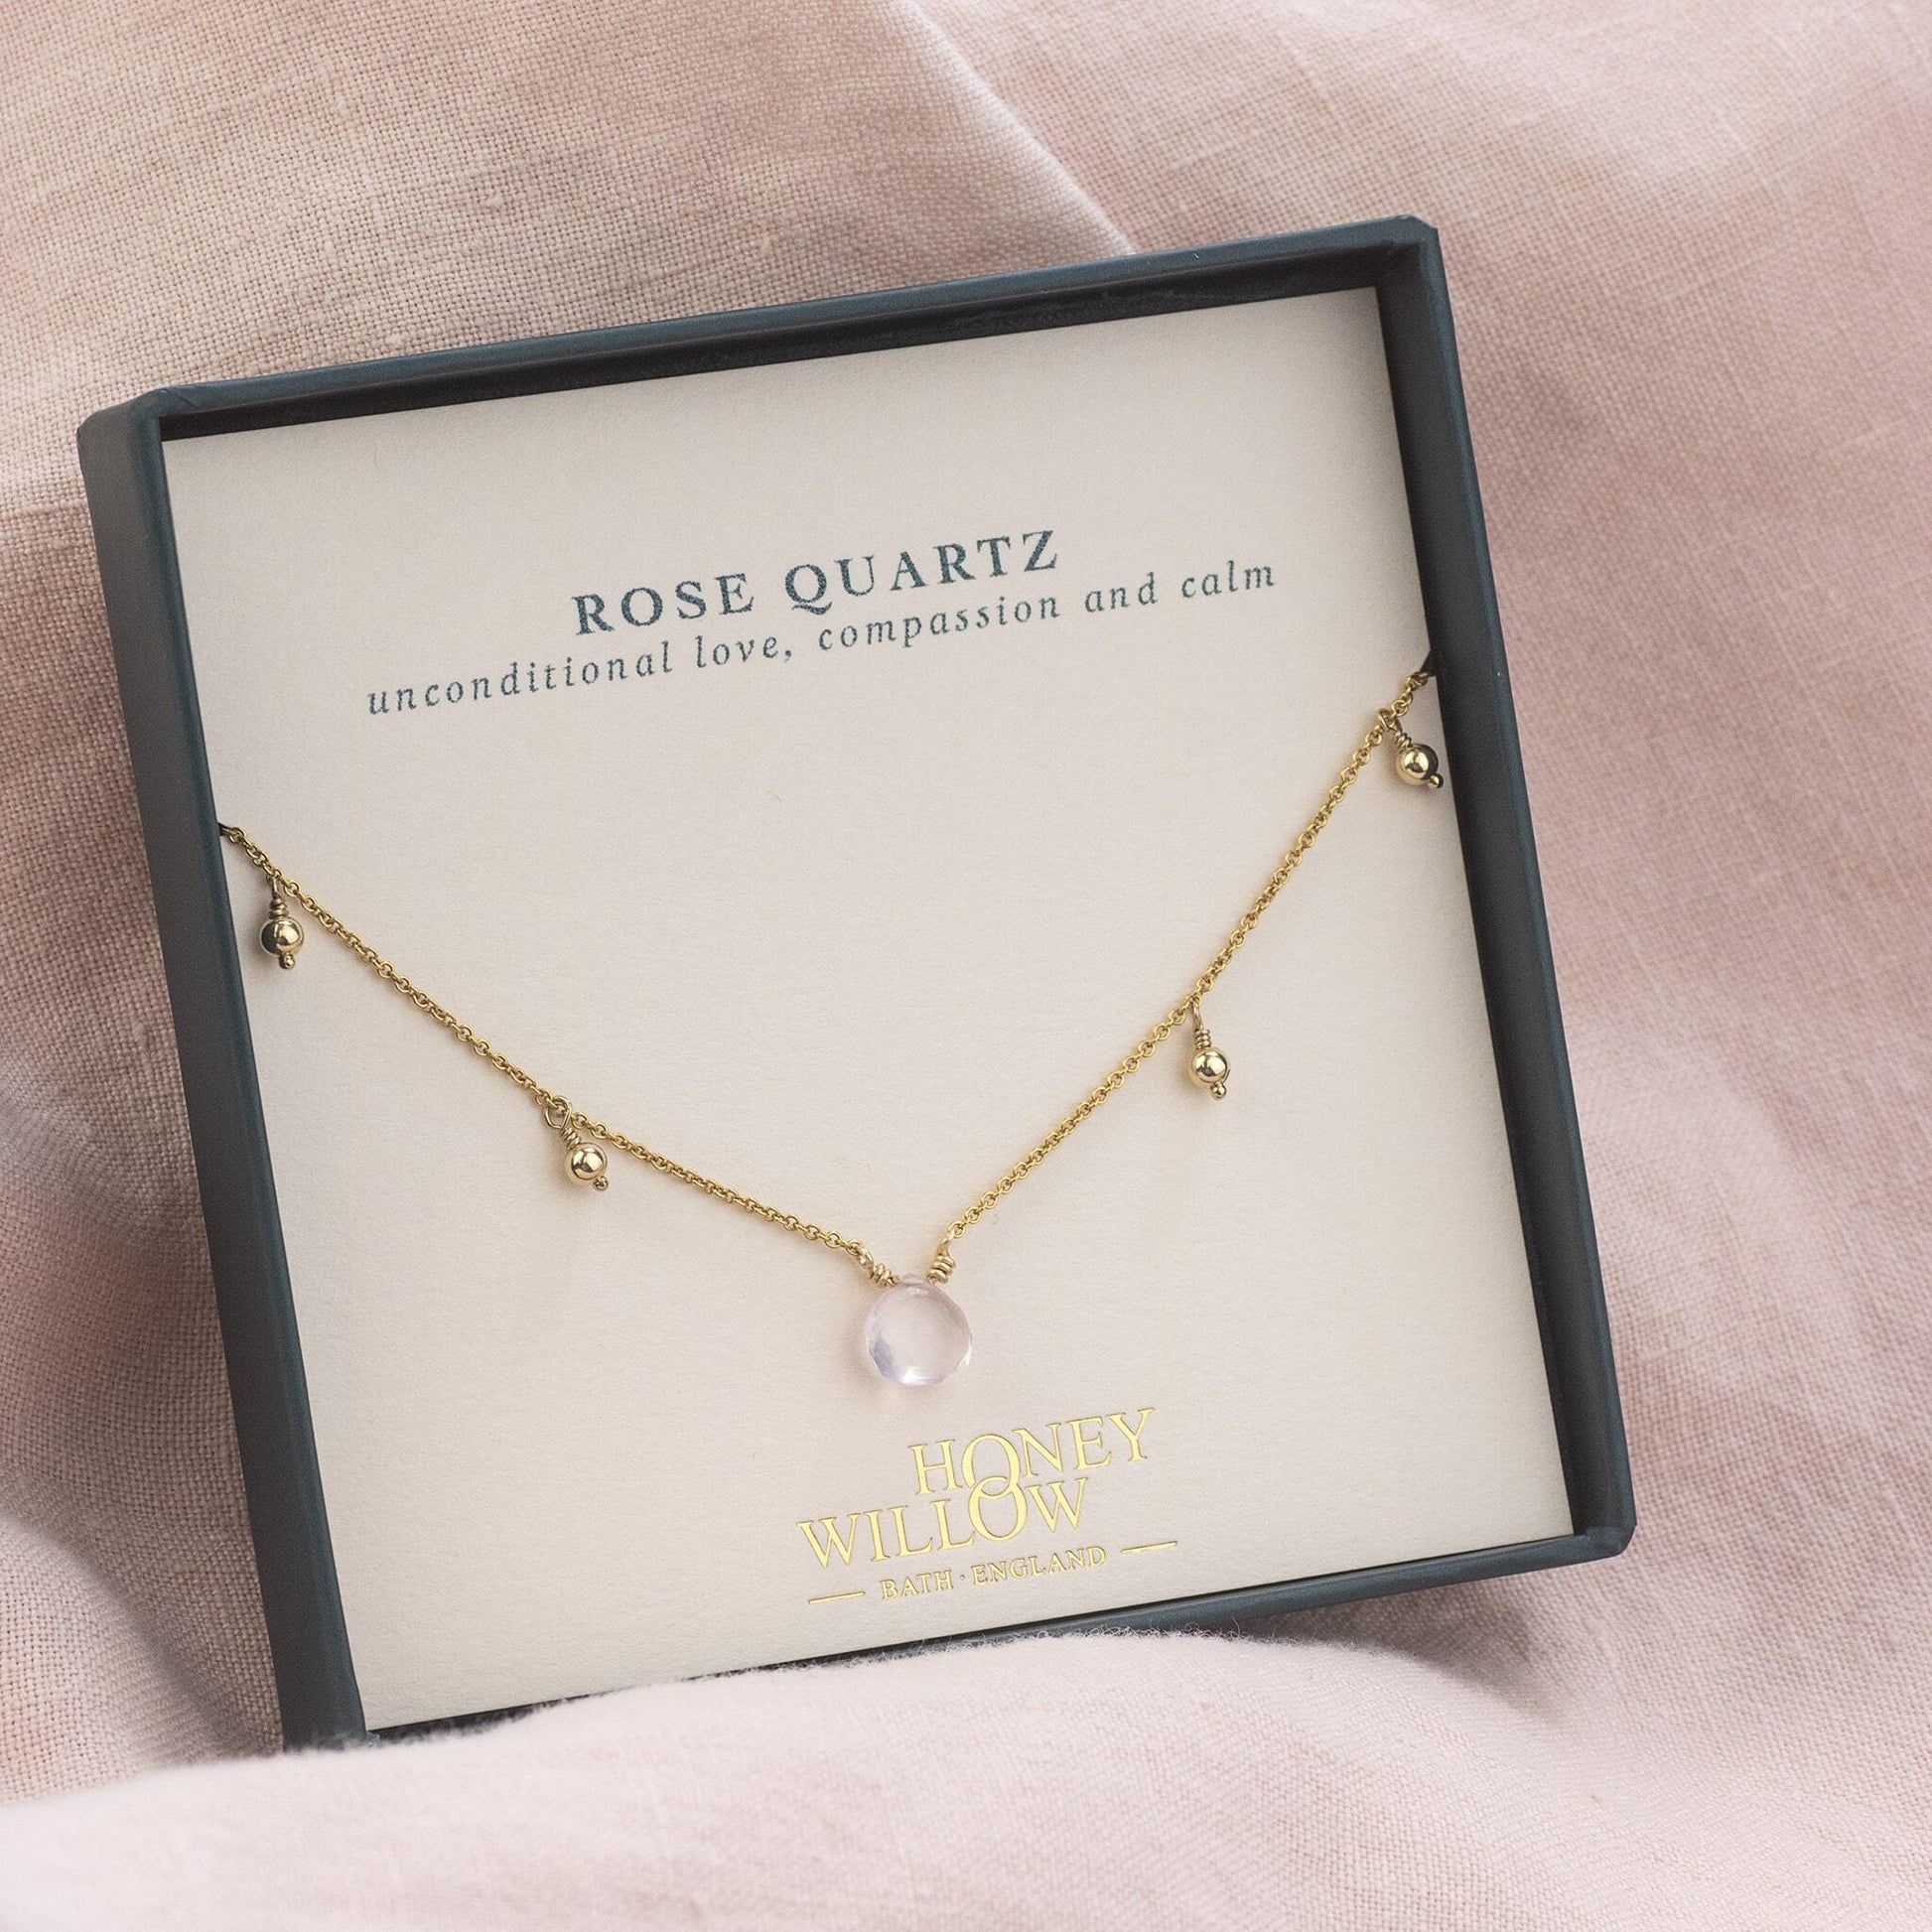 Rose Quartz Necklace - Unconditional love, compassion and calm